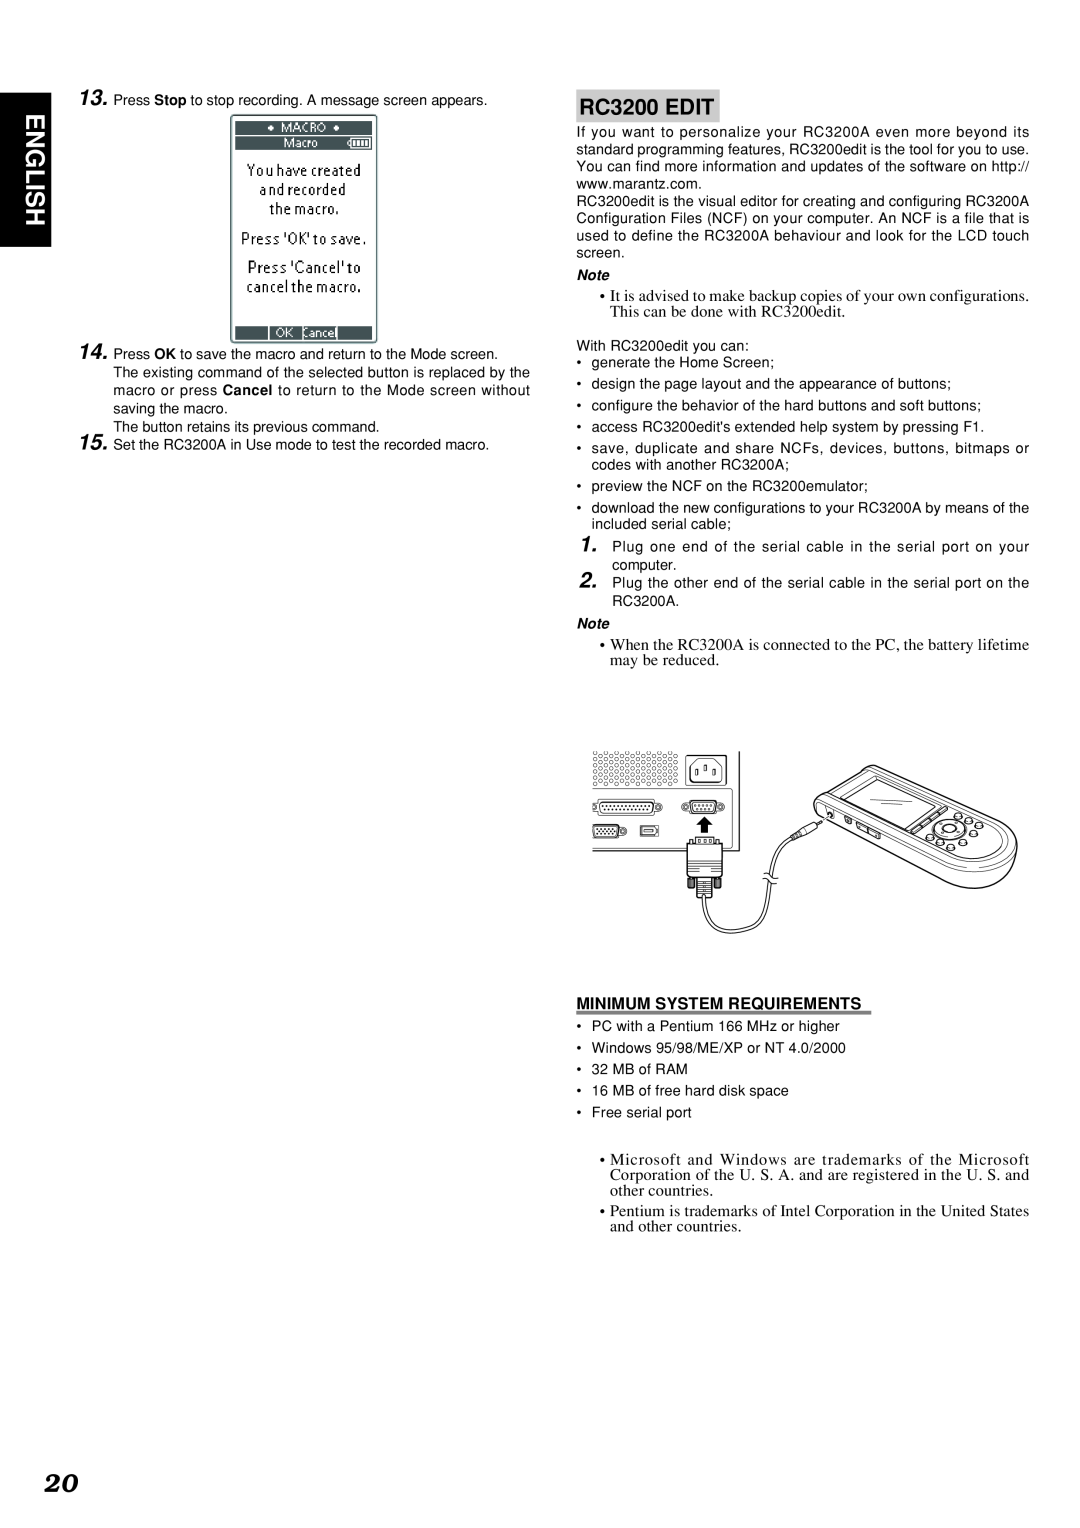 Marantz SR8200 manual English, RC3200 EDIT, Minimum System Requirements 